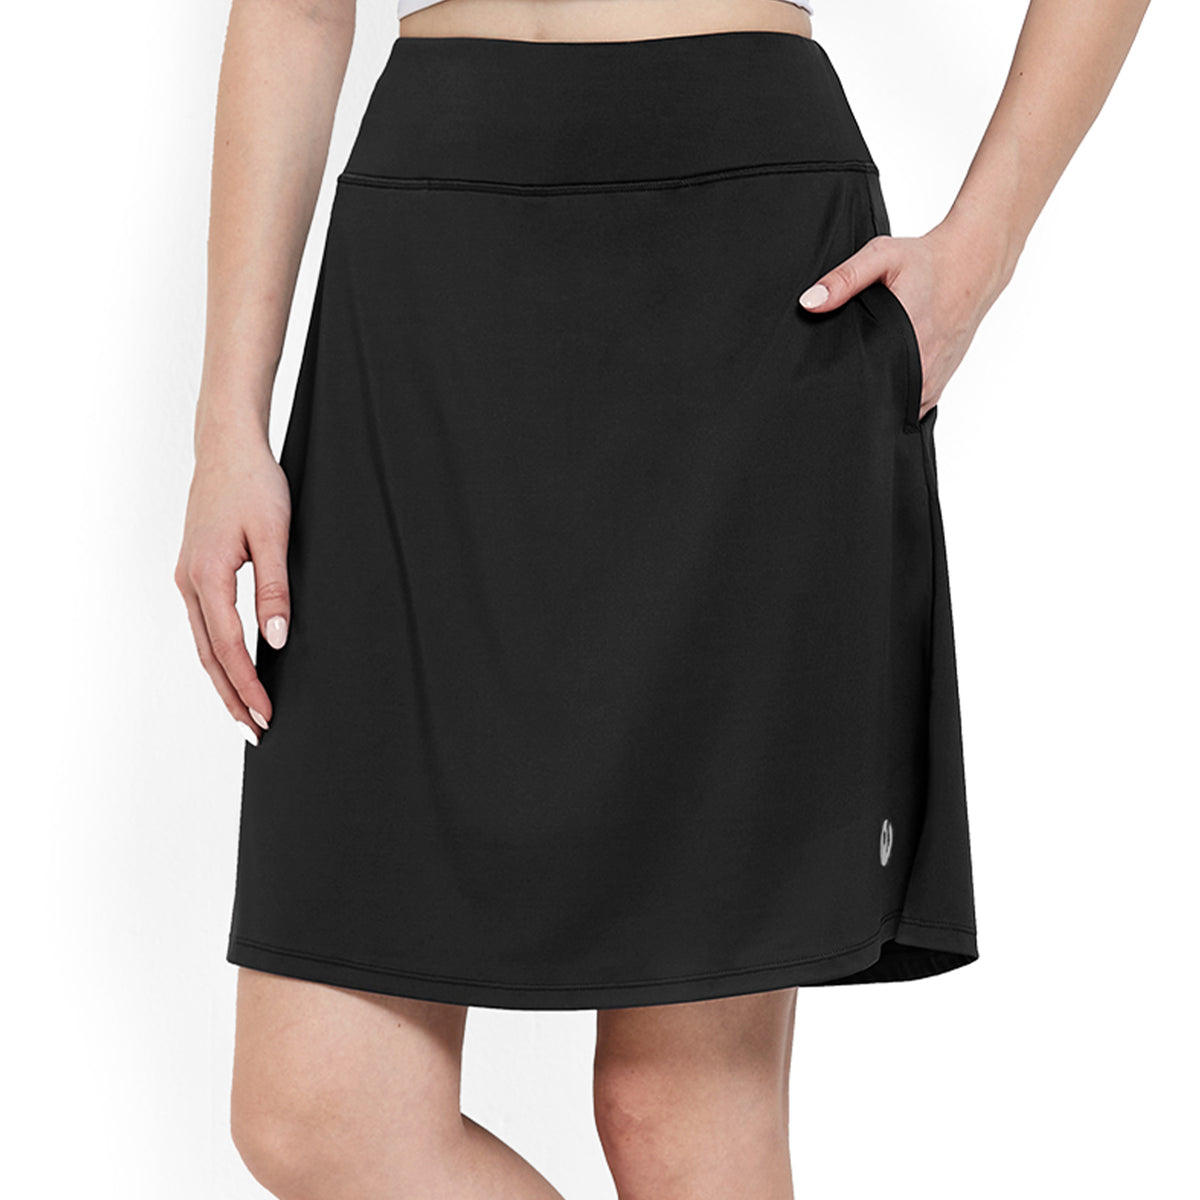 Black sports skirt with shorts - Peach Pump